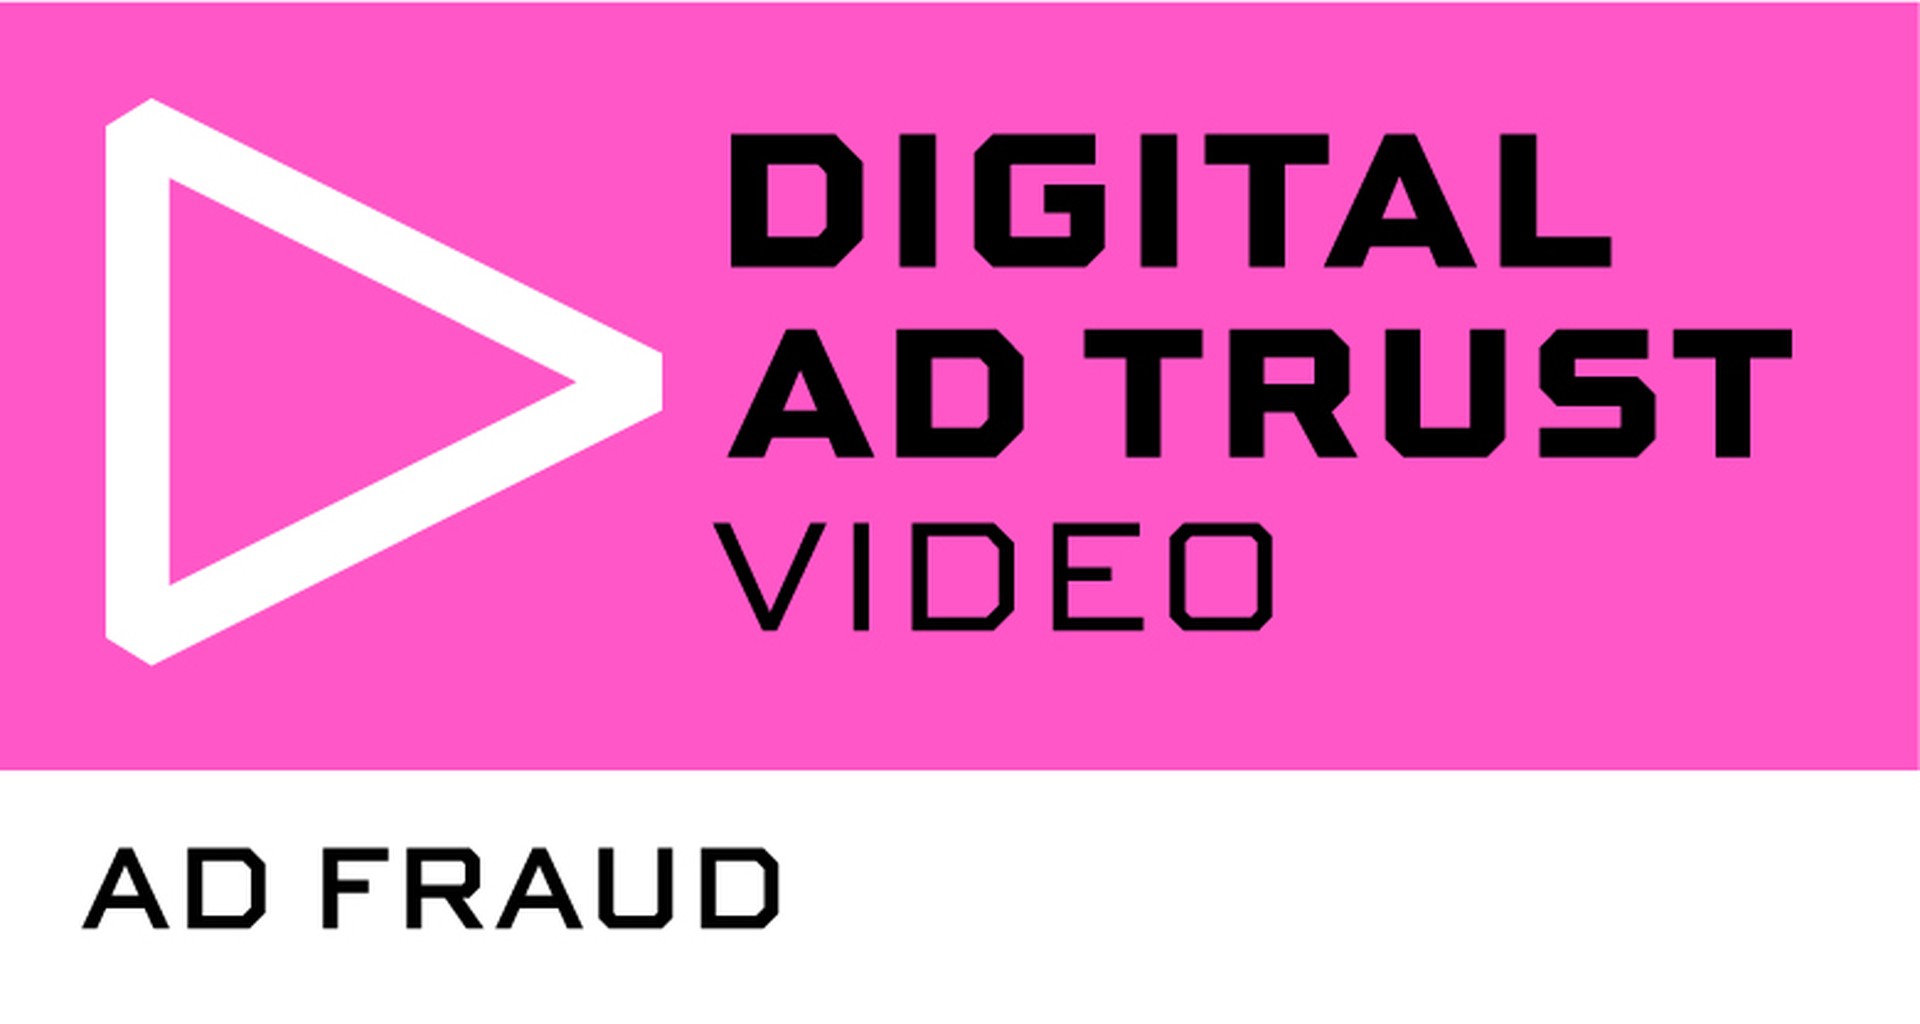 e7-labels_03_DAT 1 Ad Fraud Video.jpg